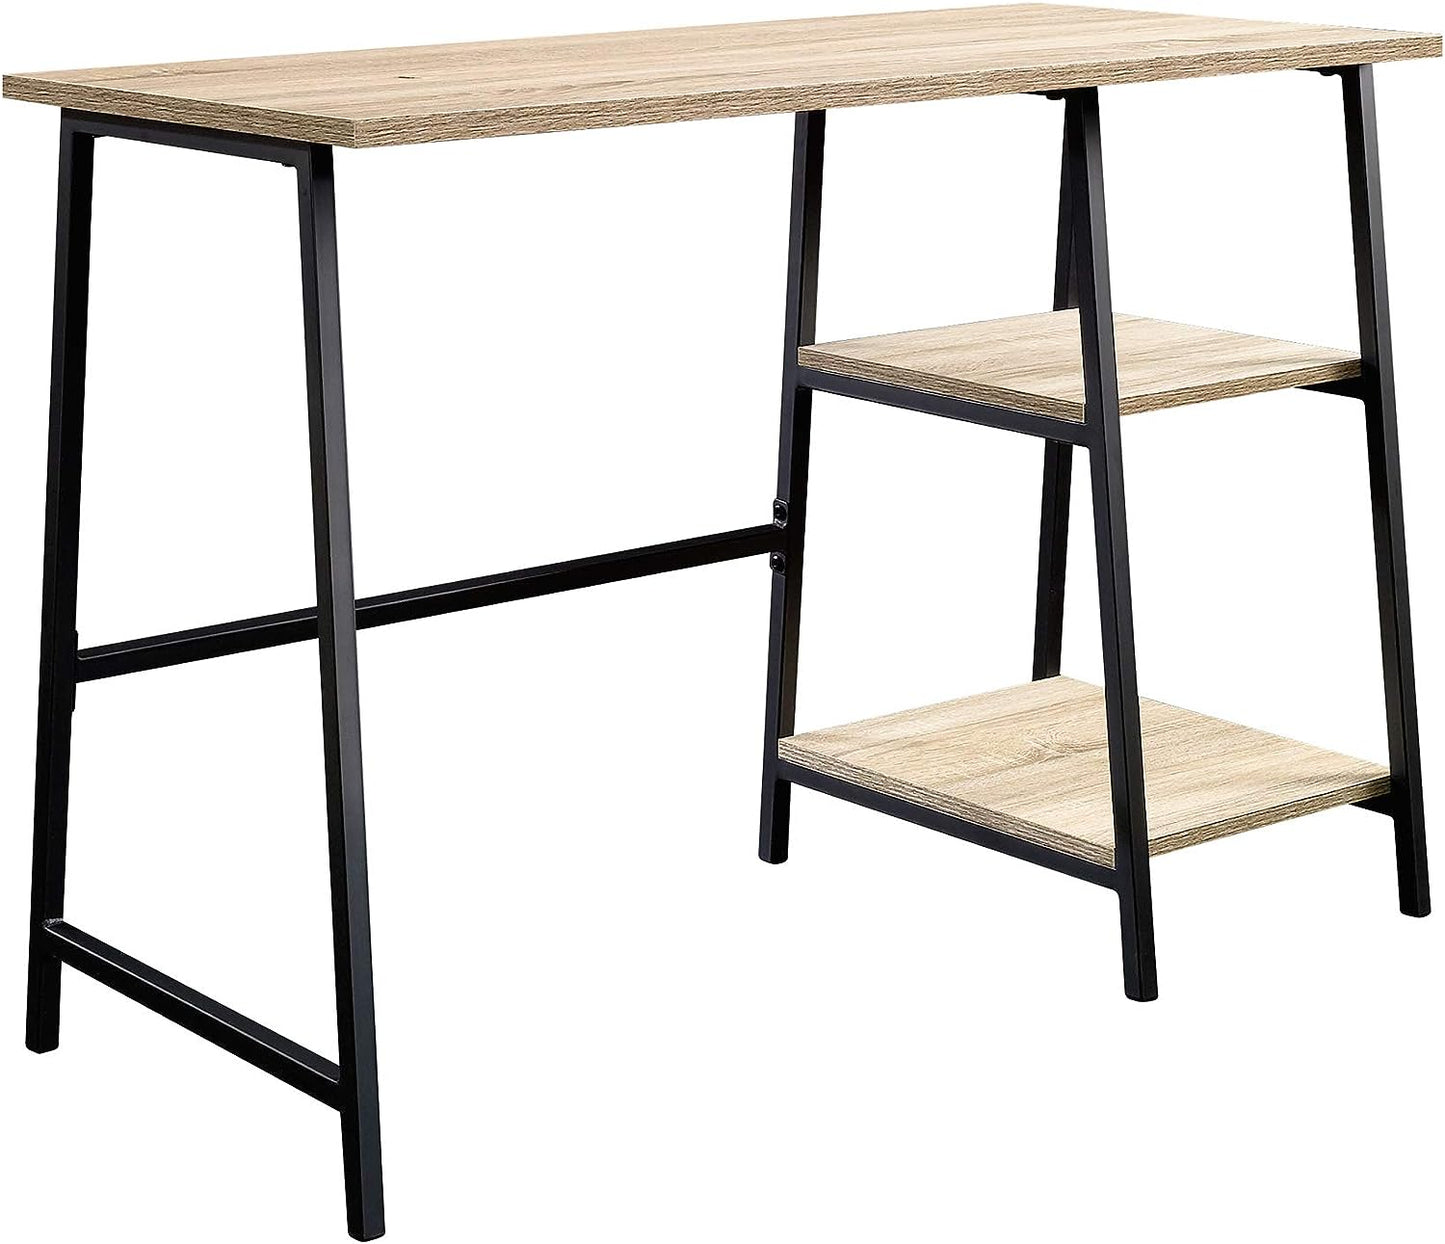 North Avenue Single Pedestal Desk With Shelves Charter Oak Finish